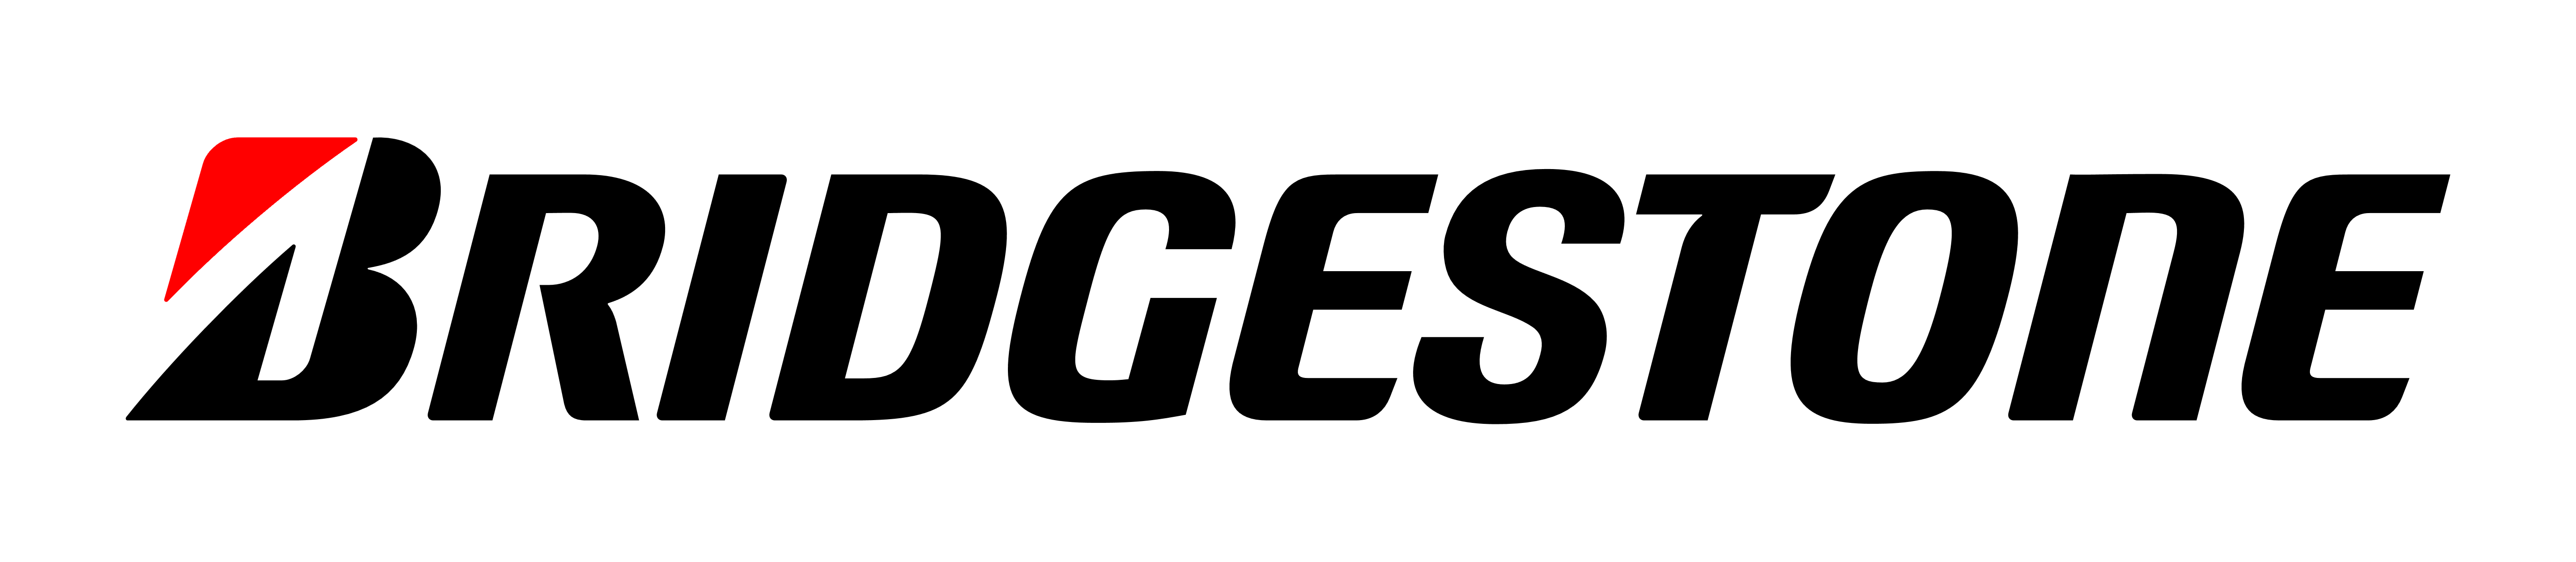 Bridgestone logo in black and red